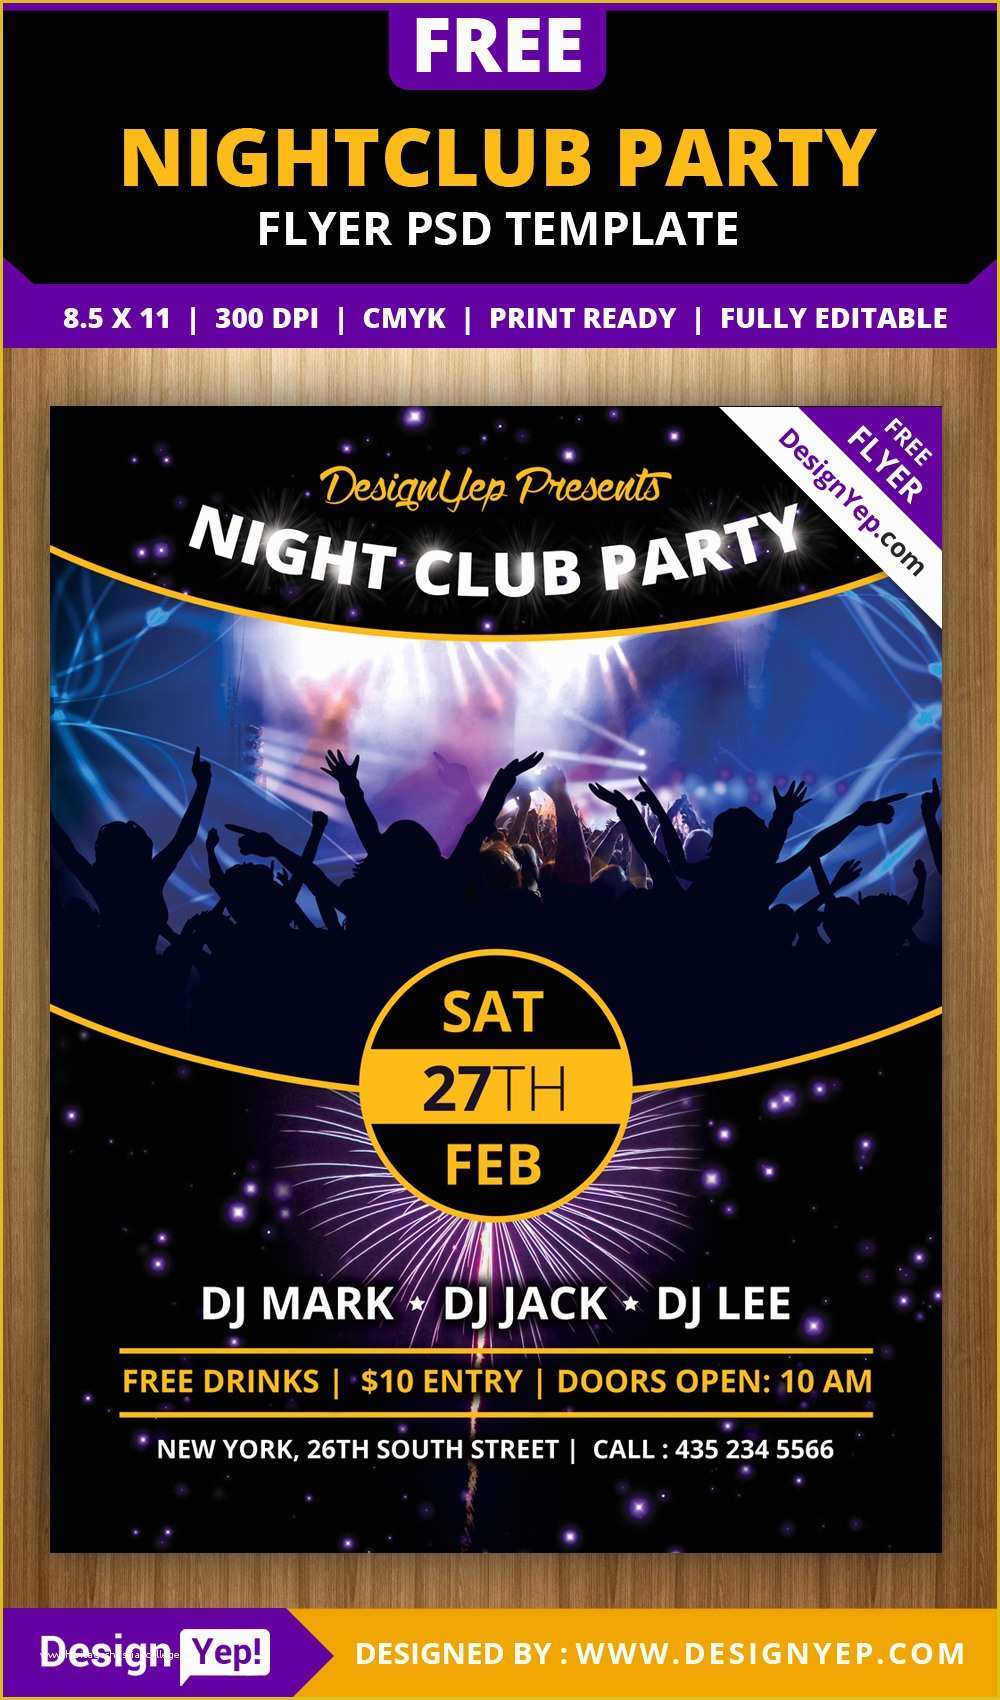 Free Nightclub Flyer Templates Of Free Nightclub Party Flyer Psd Template Designyep